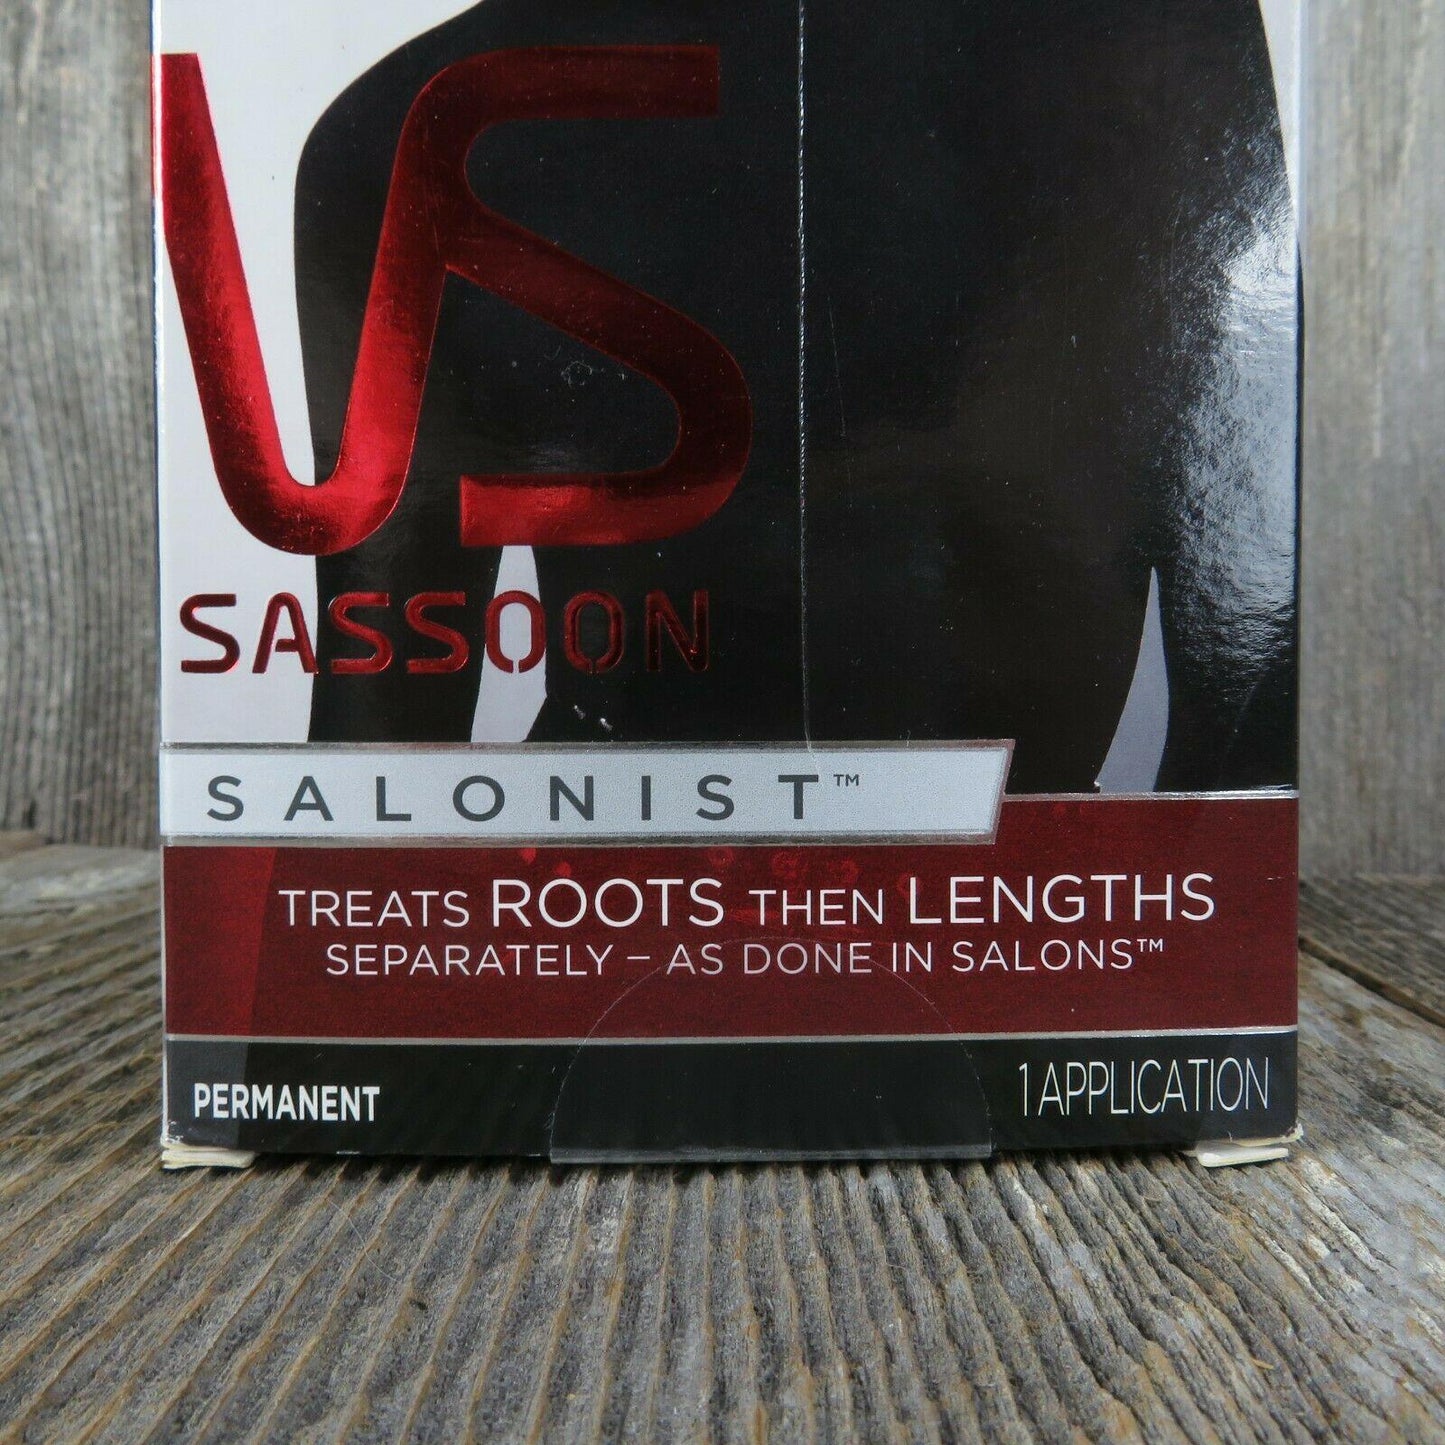 Vidal Sassoon Hair Dye 3/66 Violet Salonist Permanent Grey Coverage Kit